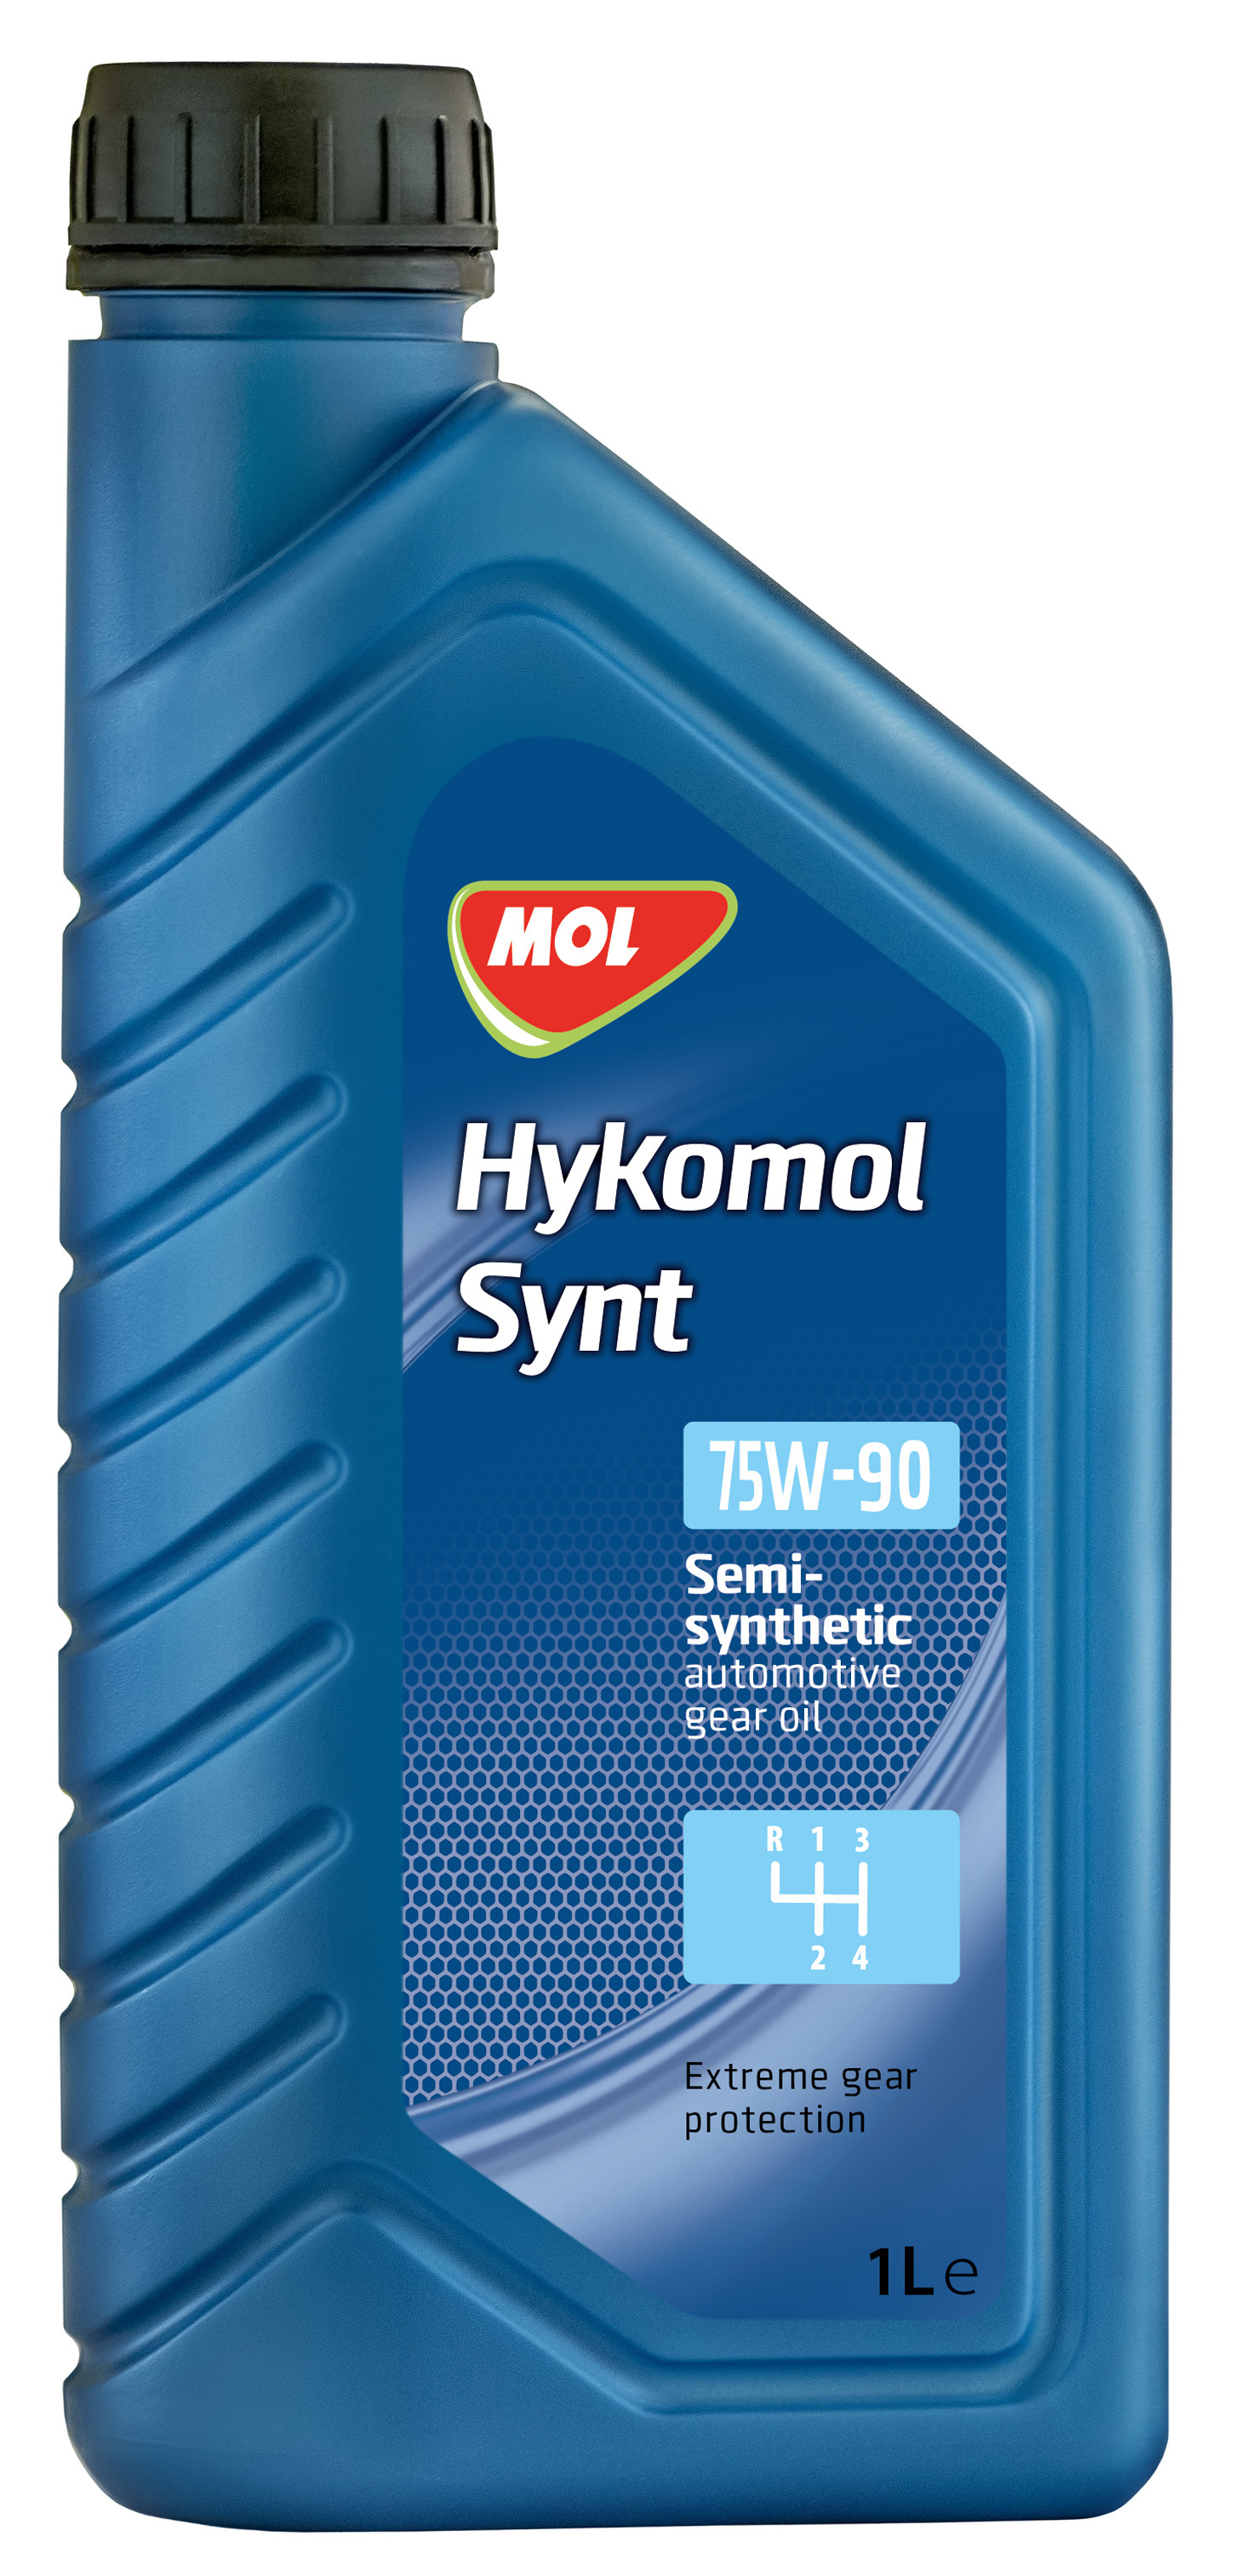 Atf iii h. Mol ATF 3g 1l. Hykomol 80w90 масло. Hykomol k80w90. Трансмиссионное масло 80w-90 Геартекс.